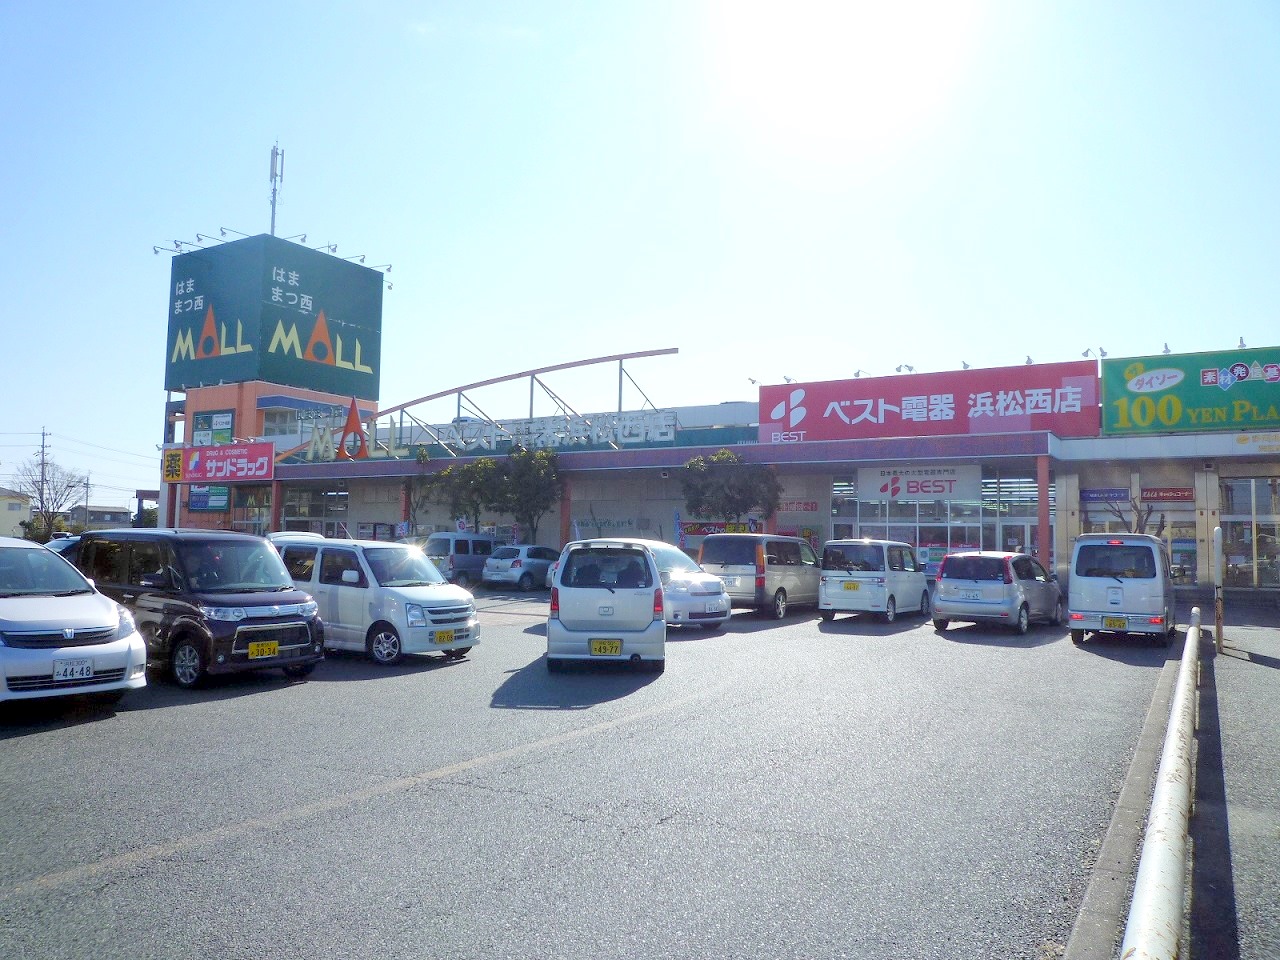 Shopping centre. 777m until Hamamatsunishi MALL (shopping center)